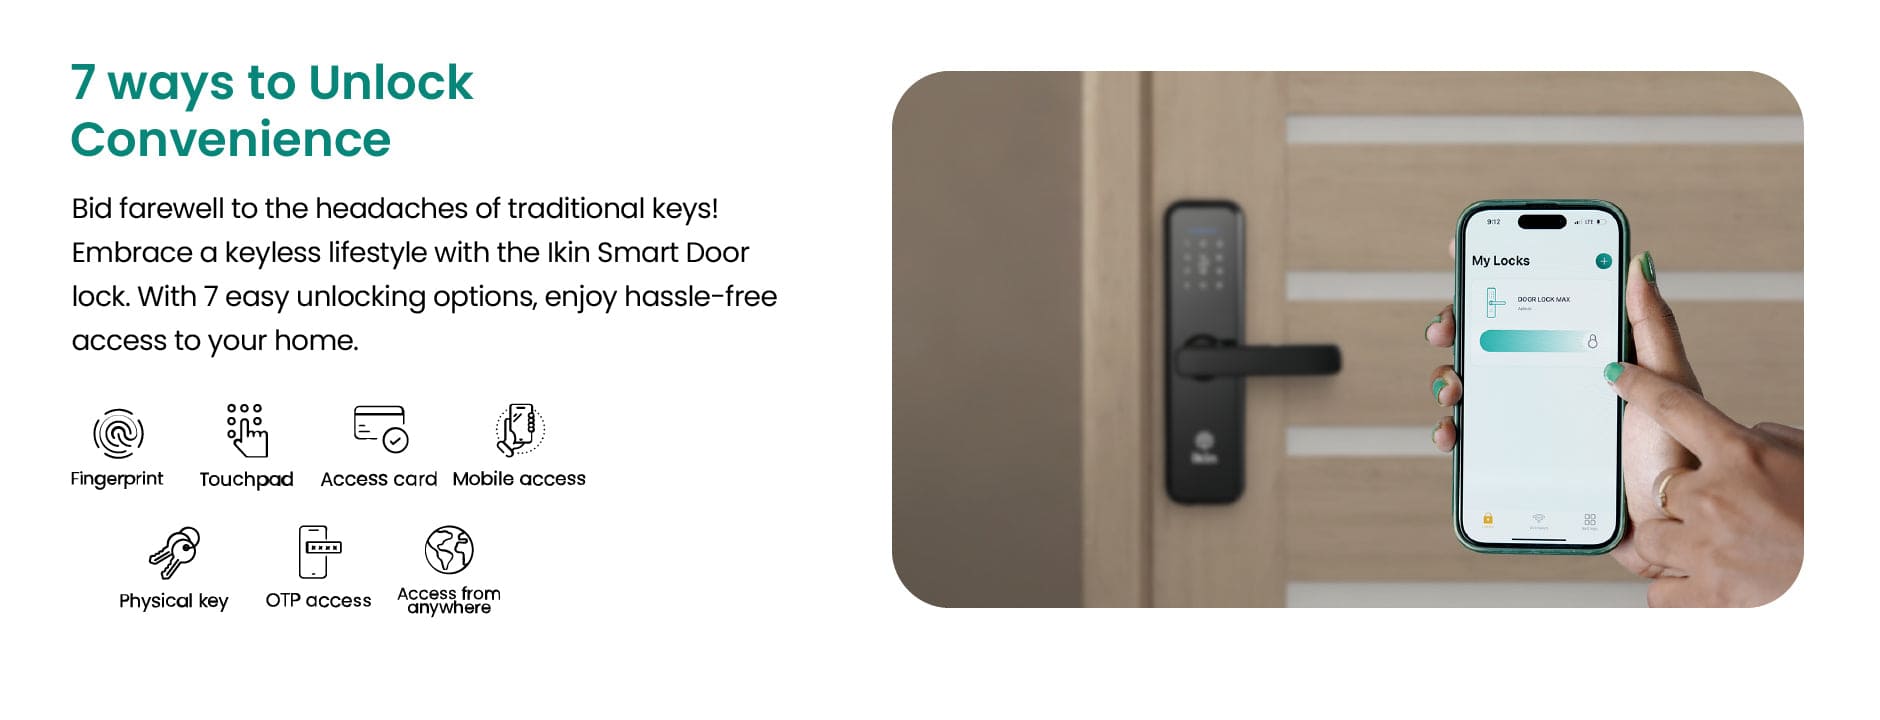 IKIN Max Smart Lock - Description - 7 ways to unlock